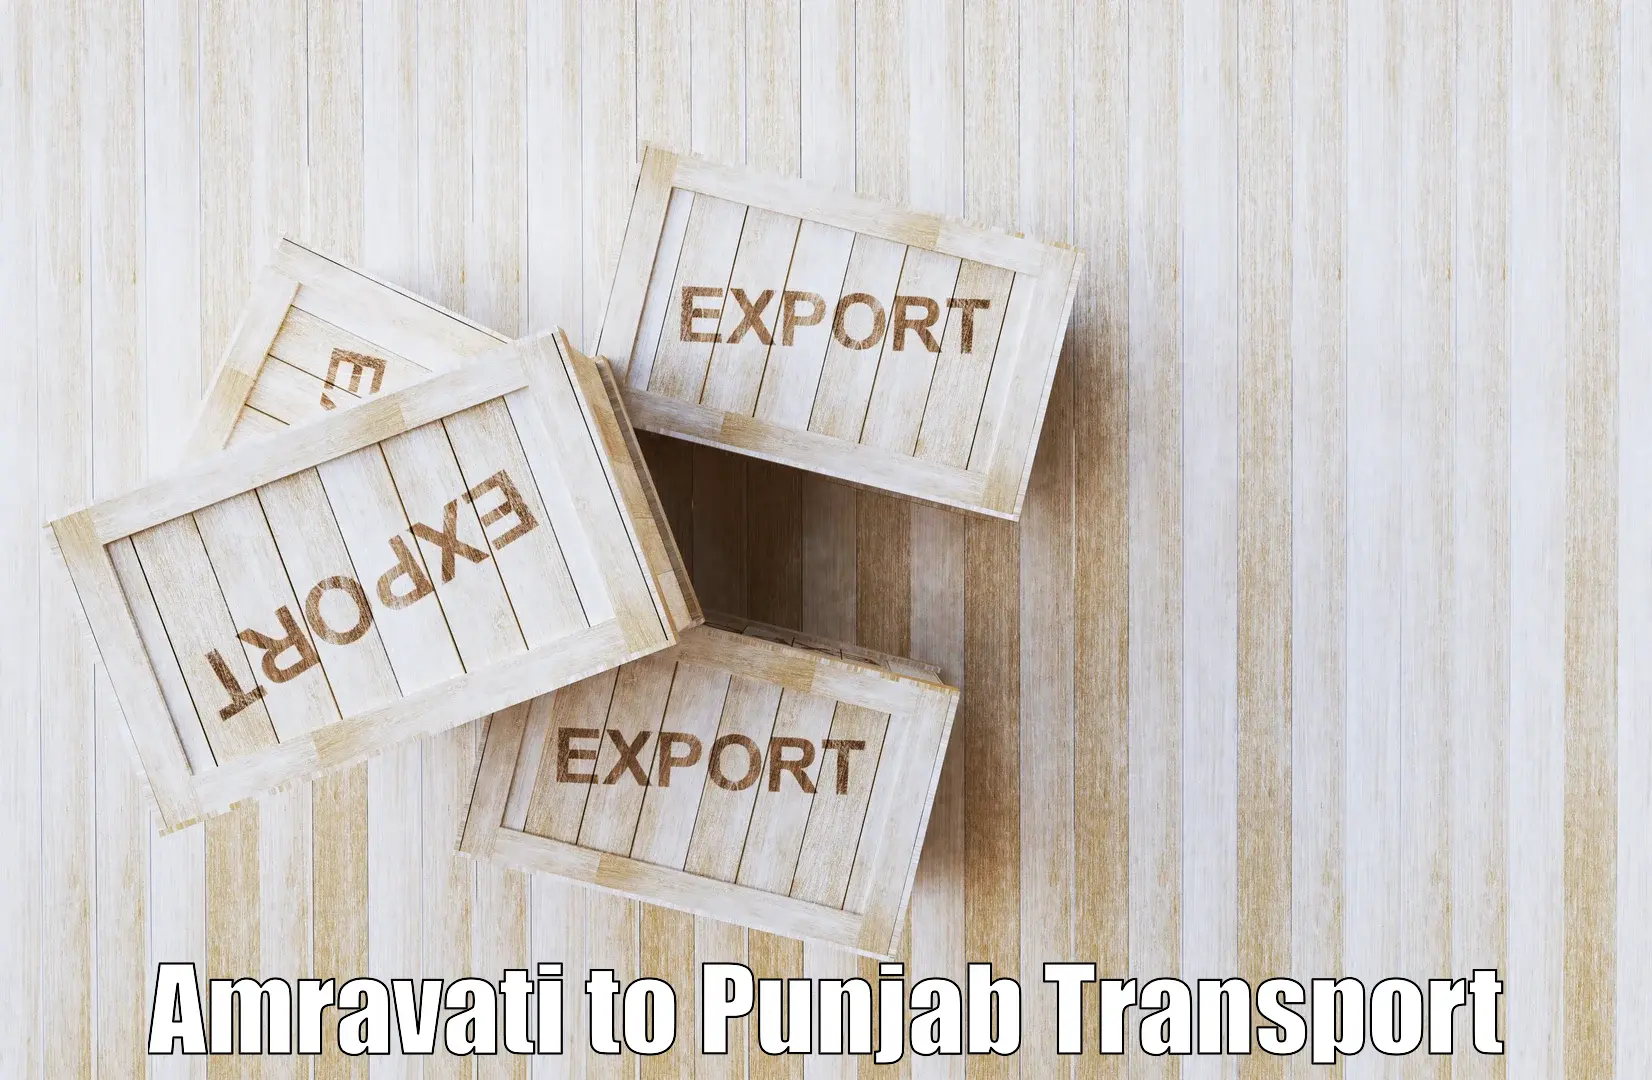 Nearby transport service Amravati to Patiala